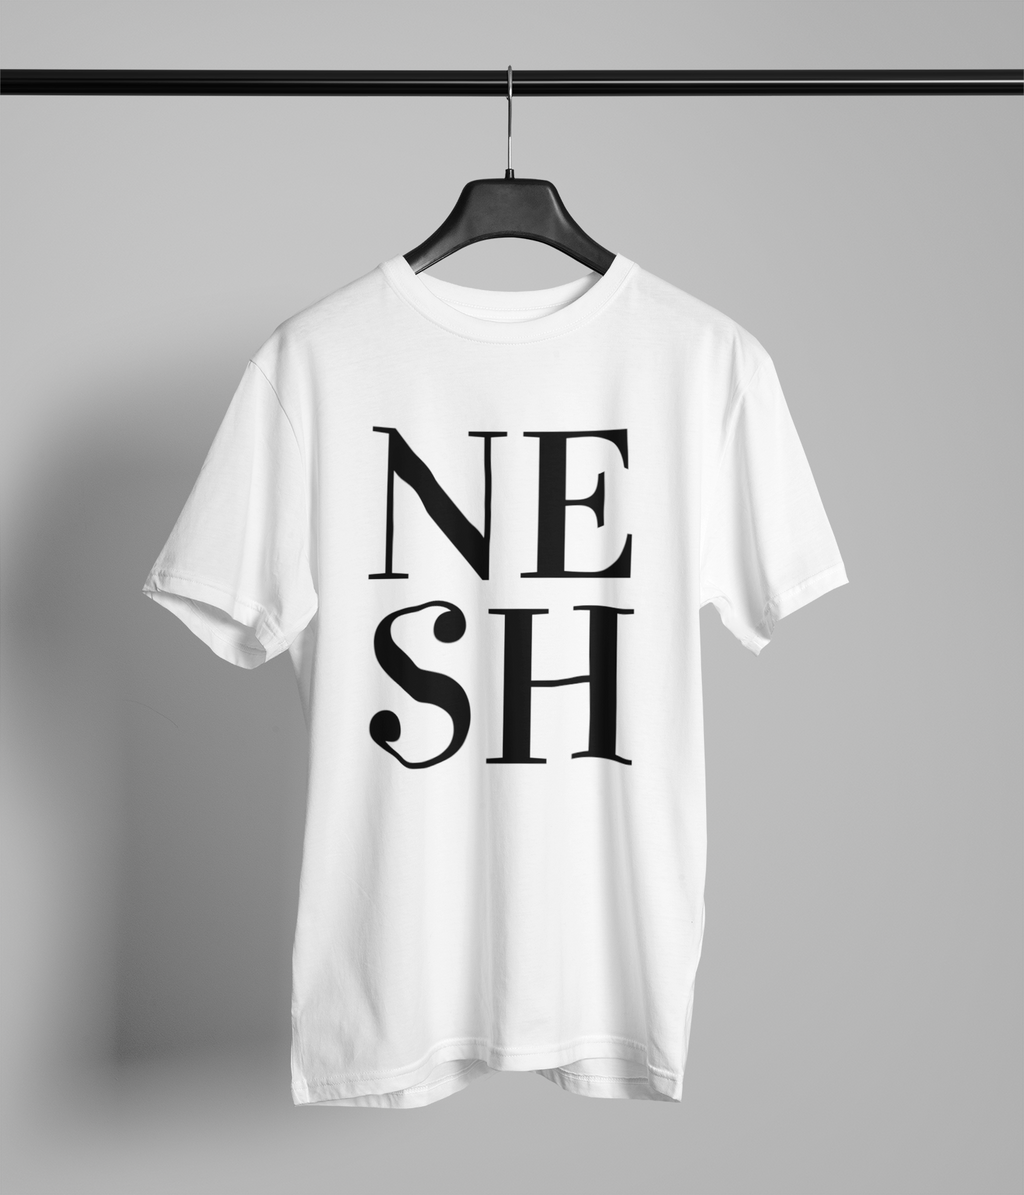 NESH Northern Slang Unisex T-Shirt